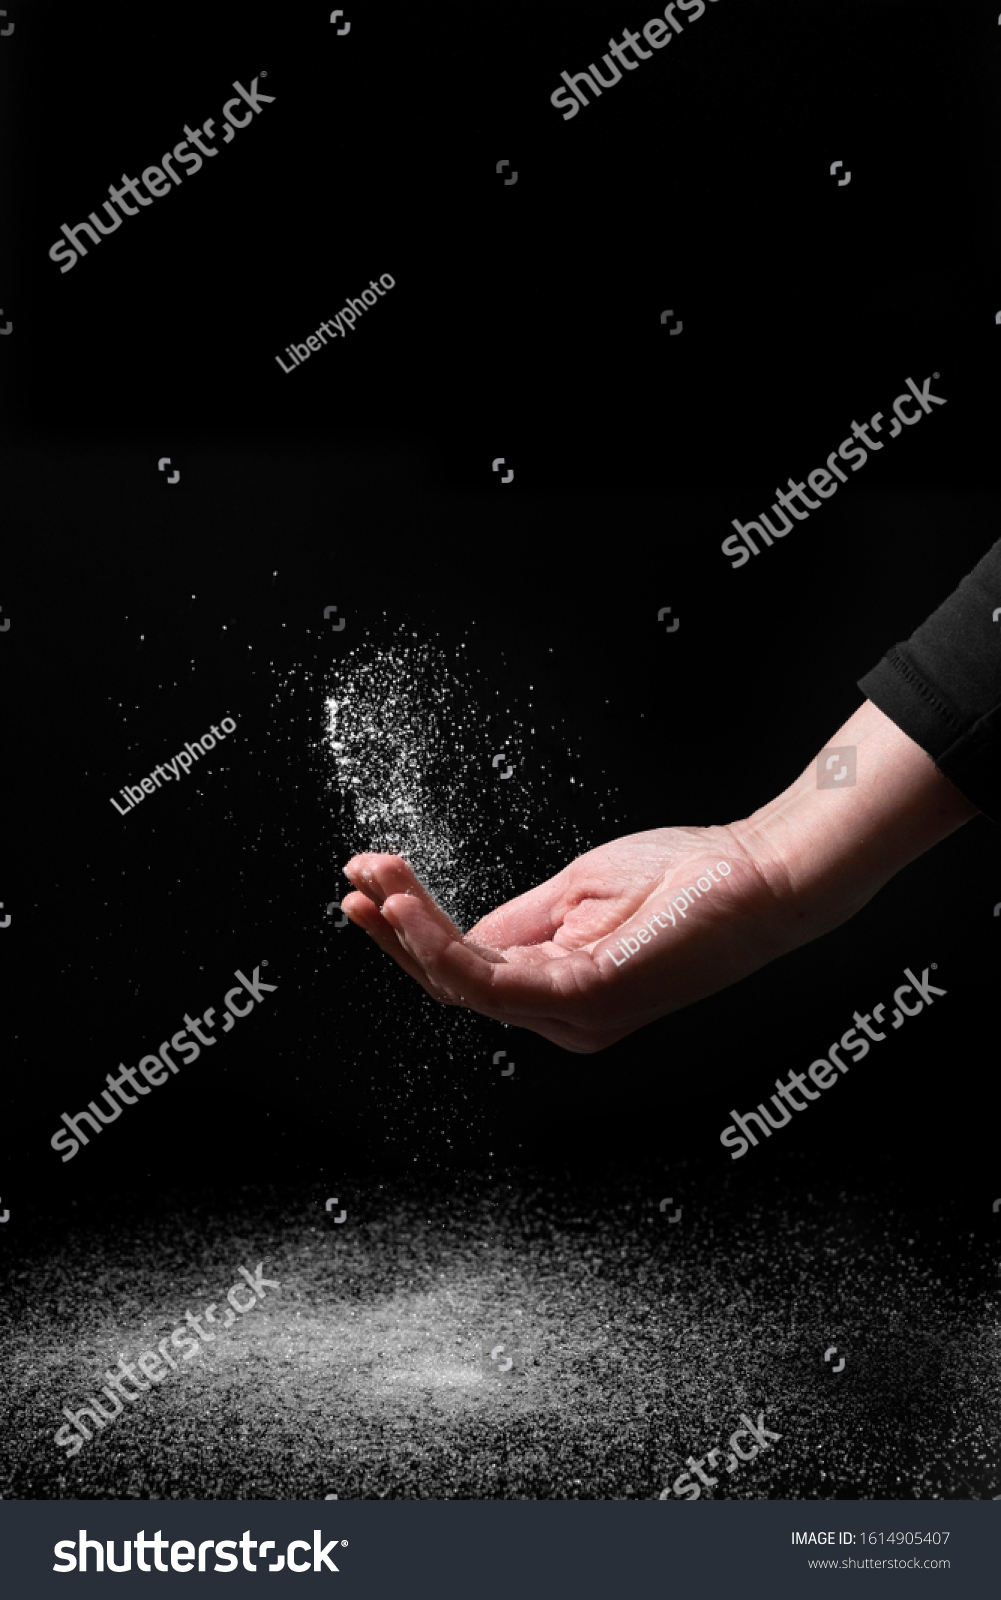 Creative image of hand scattering sugar powder on a dark background #1614905407